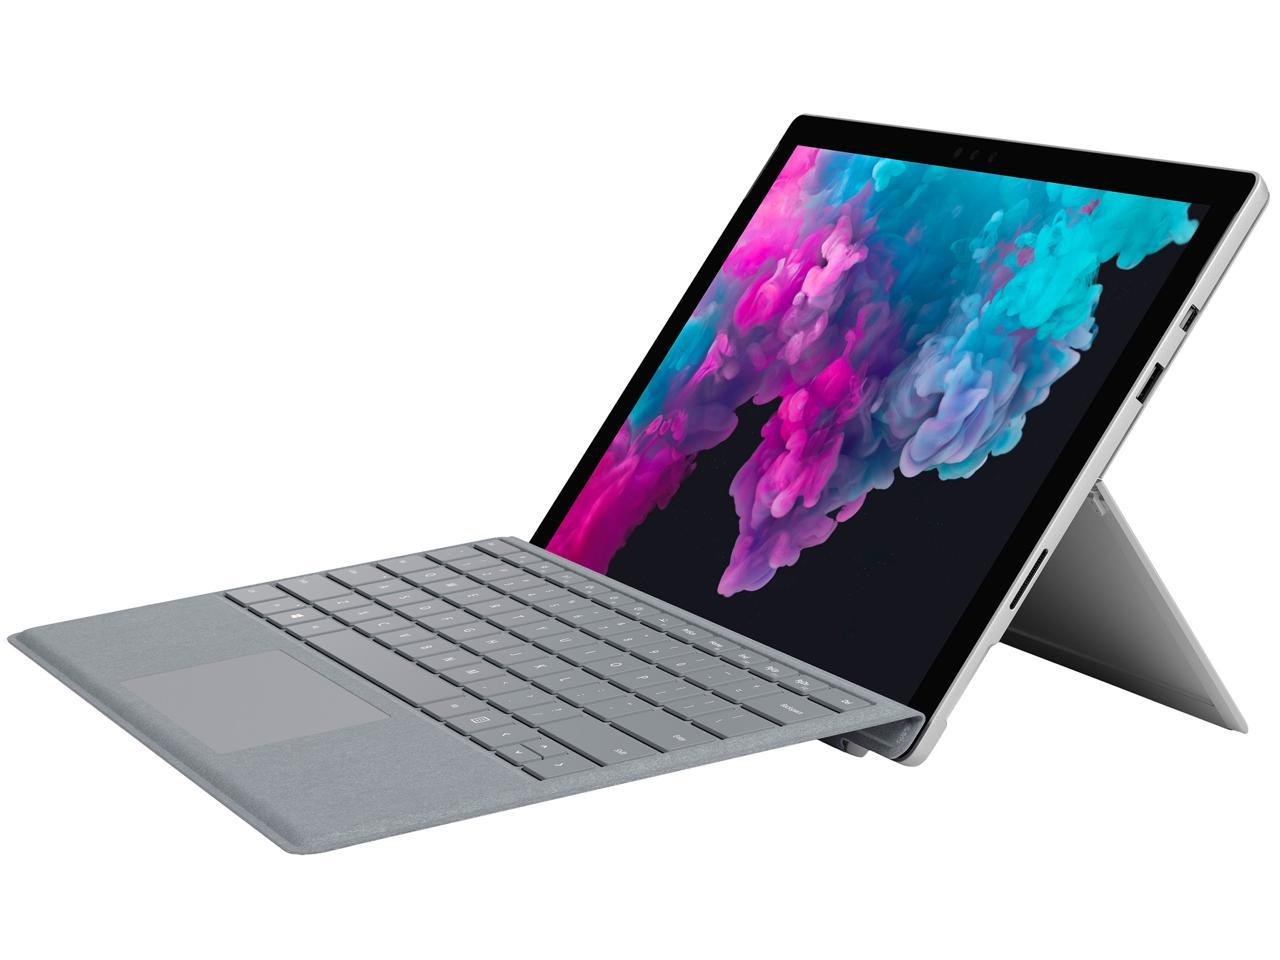 Microsoft Surface Pro 6 (LJK-00001) with Keyboard 2-in-1 Laptop Intel